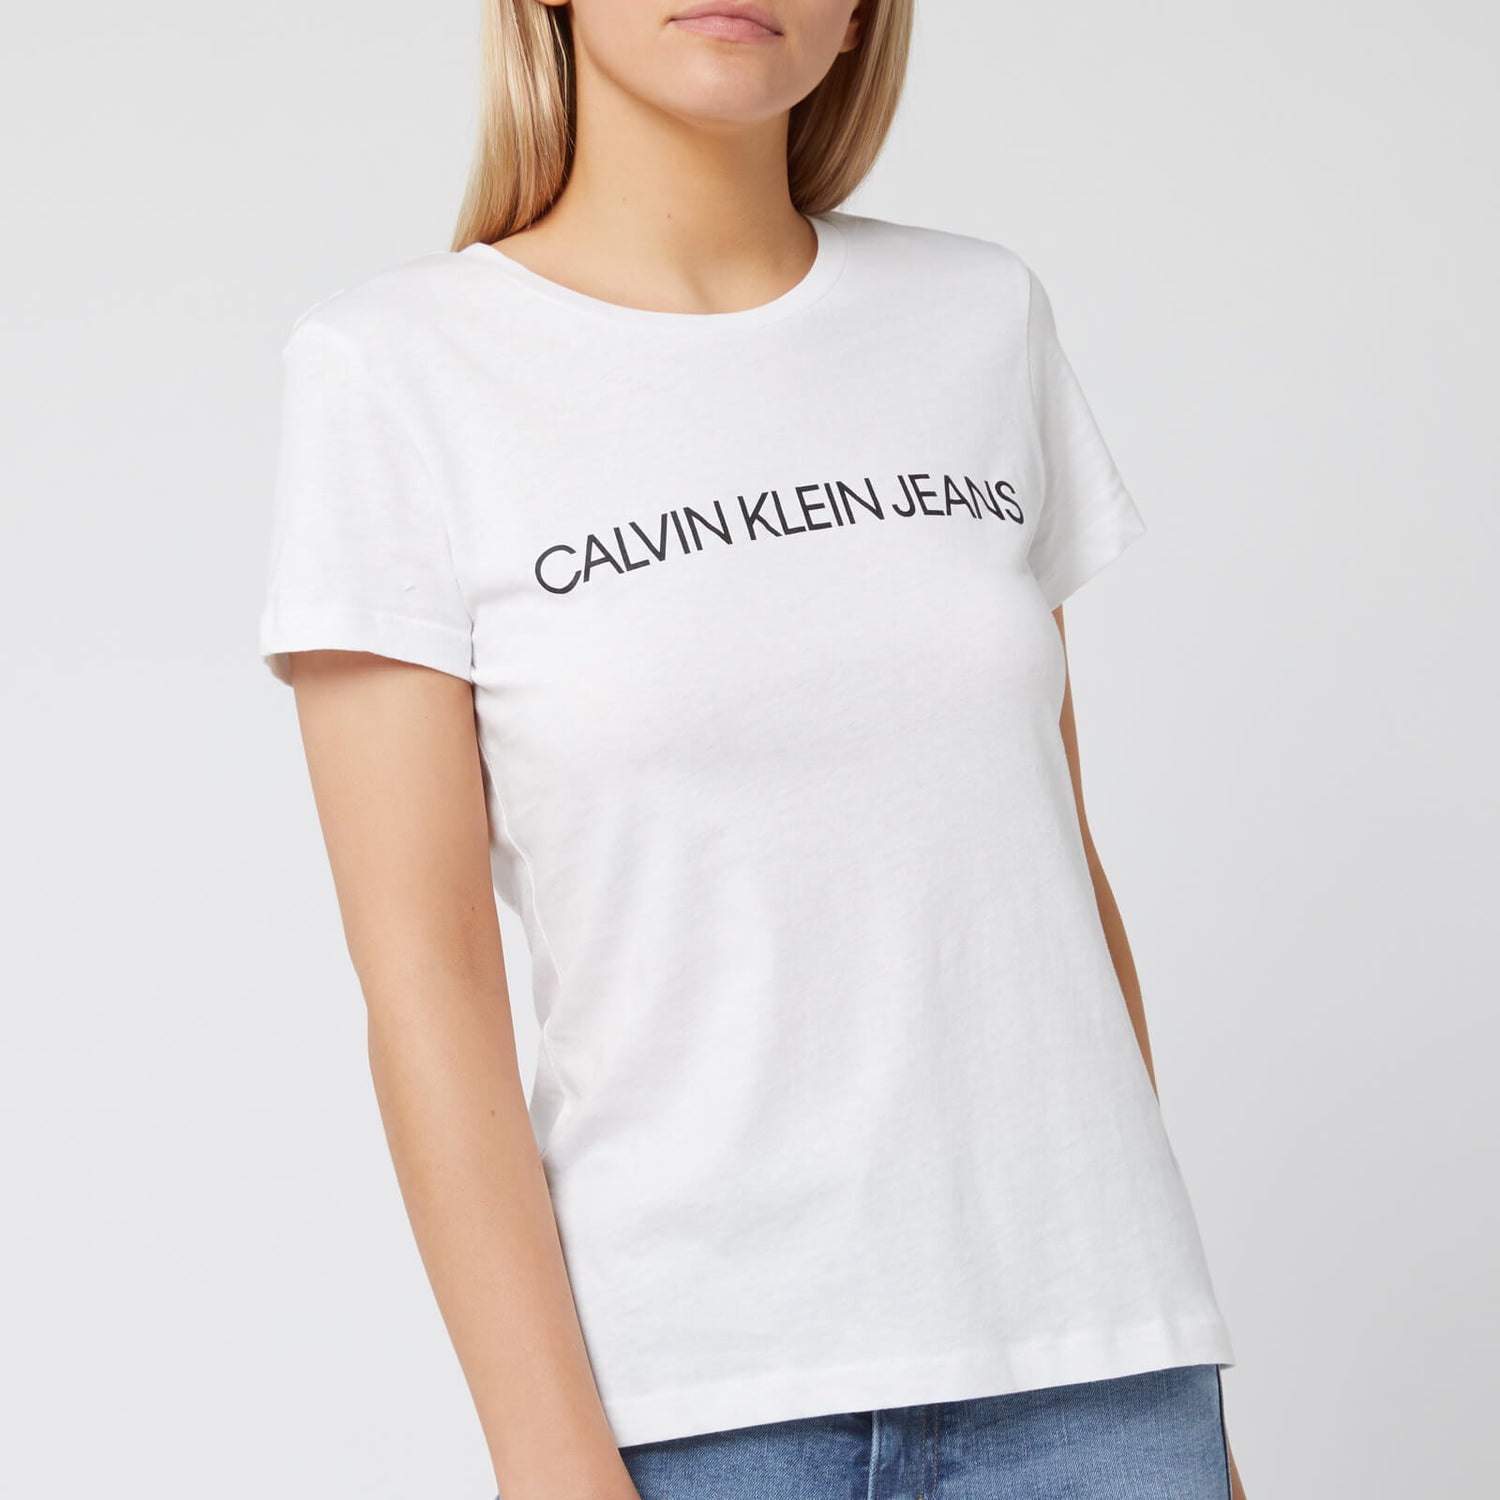 Calvin Klein Jeans Women's Institutional Logo Slim Fit T-Shirt - Bright White - XS